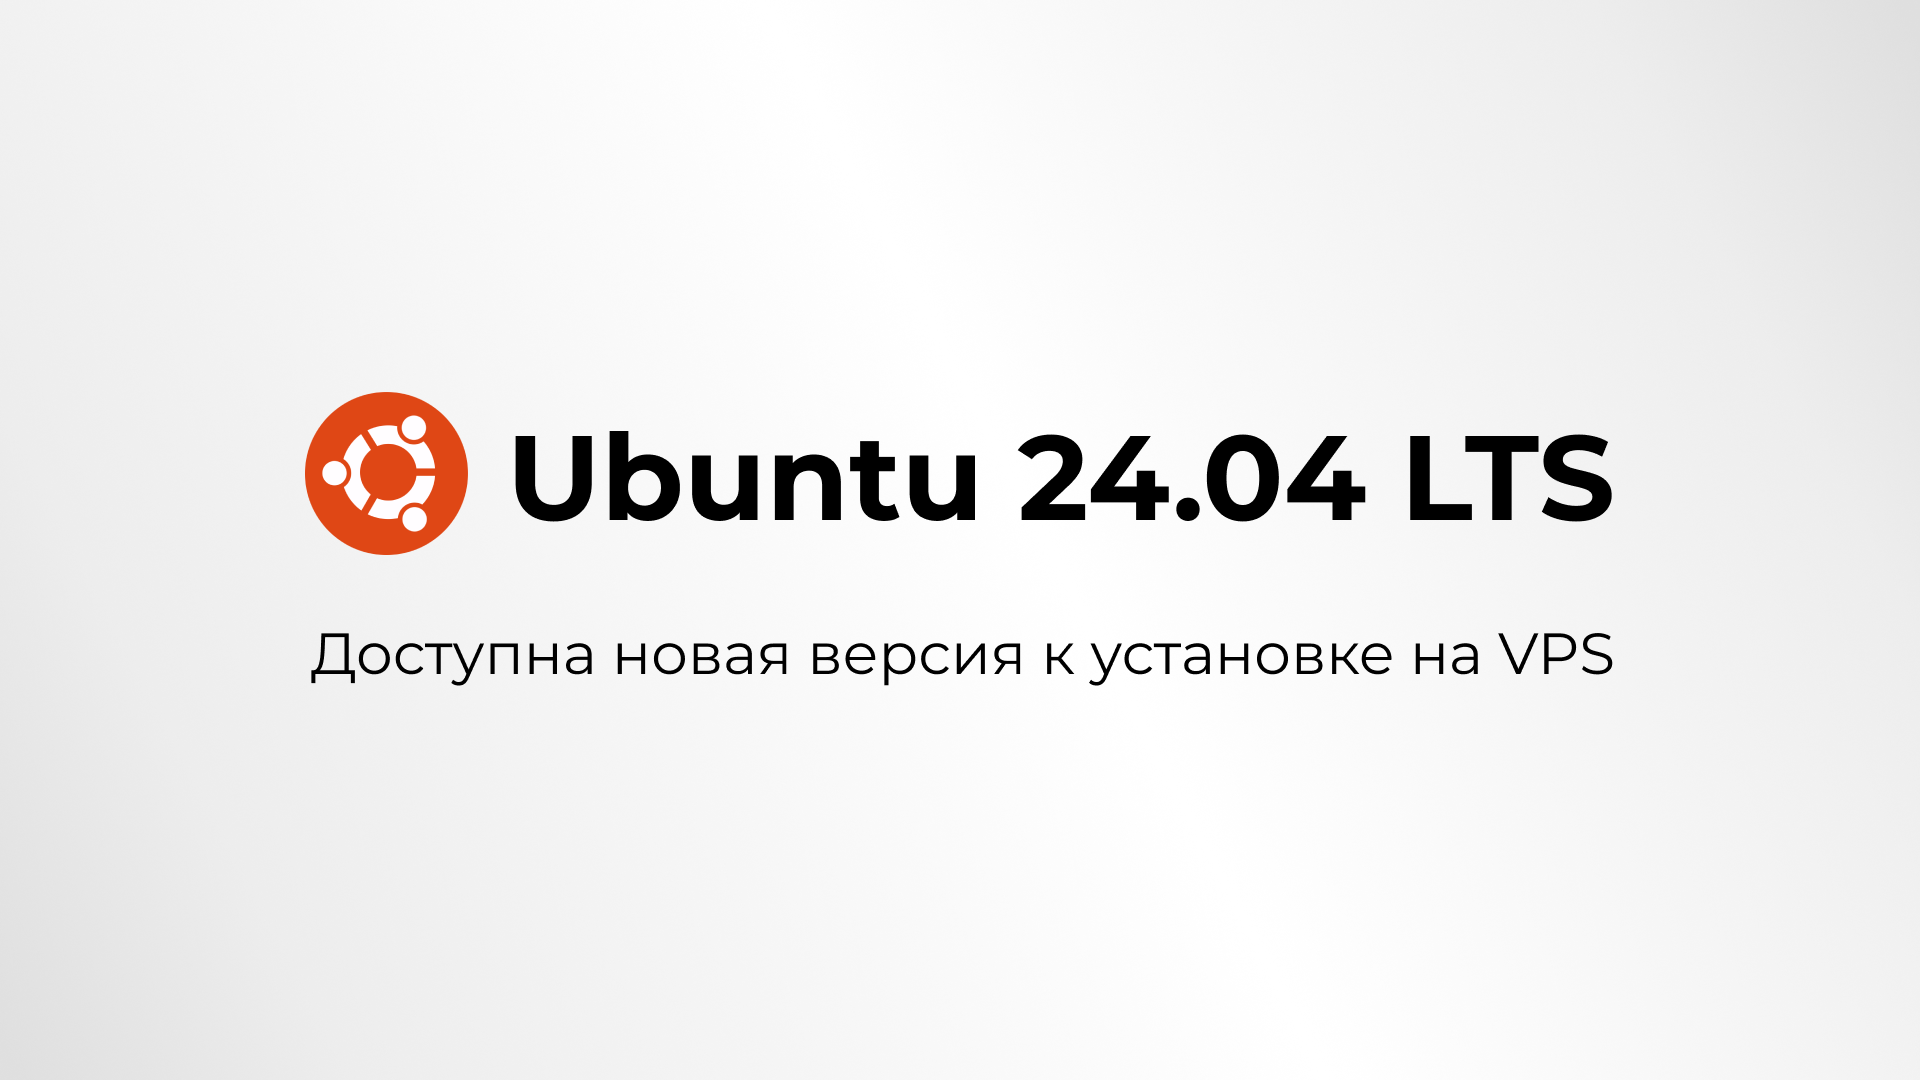 Дистрибутив Ubuntu 24.04 LTS доступен к установке на VPS